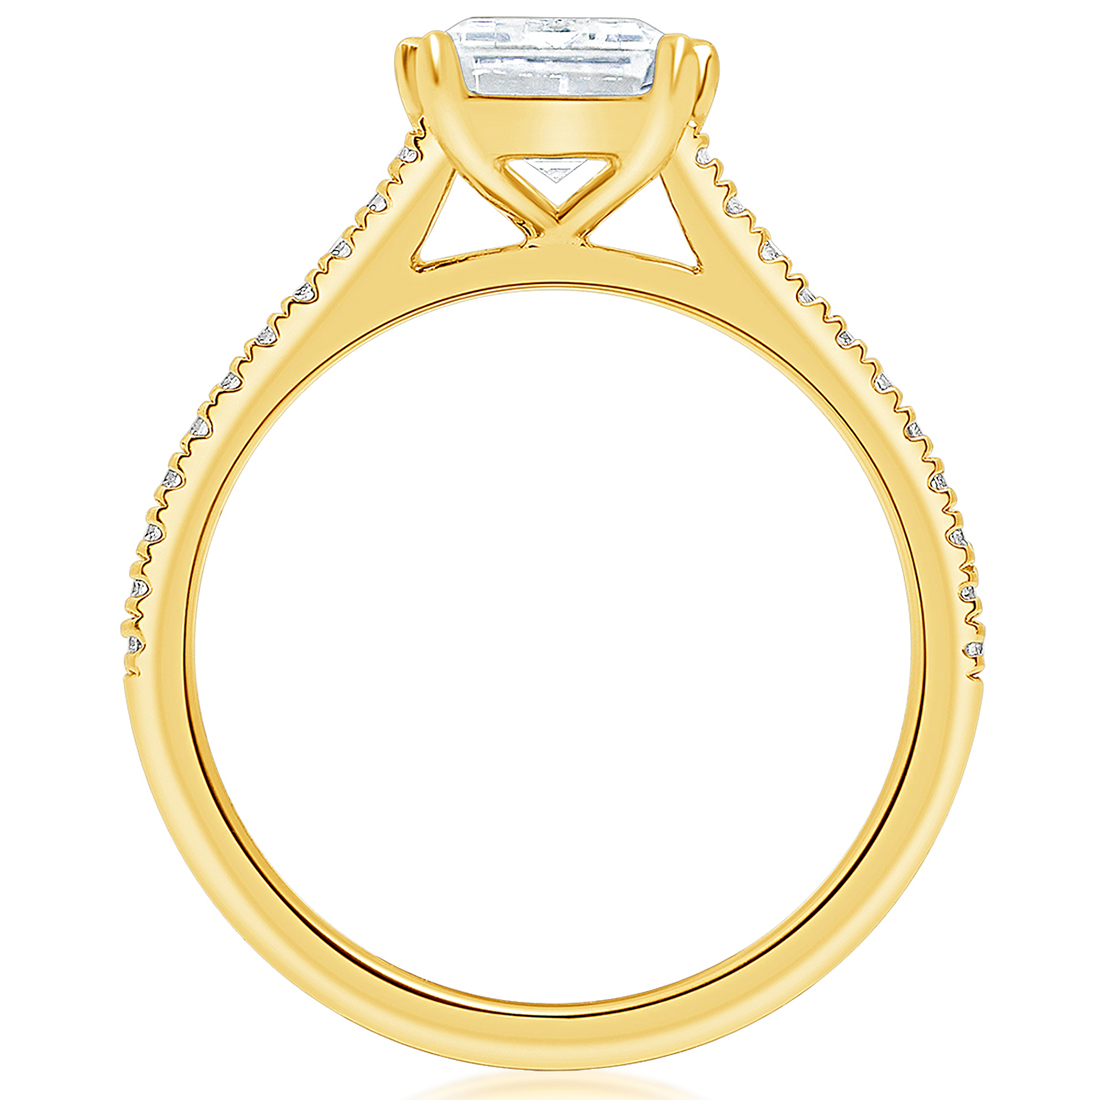 Emerald Diamond Band Engagement Ring